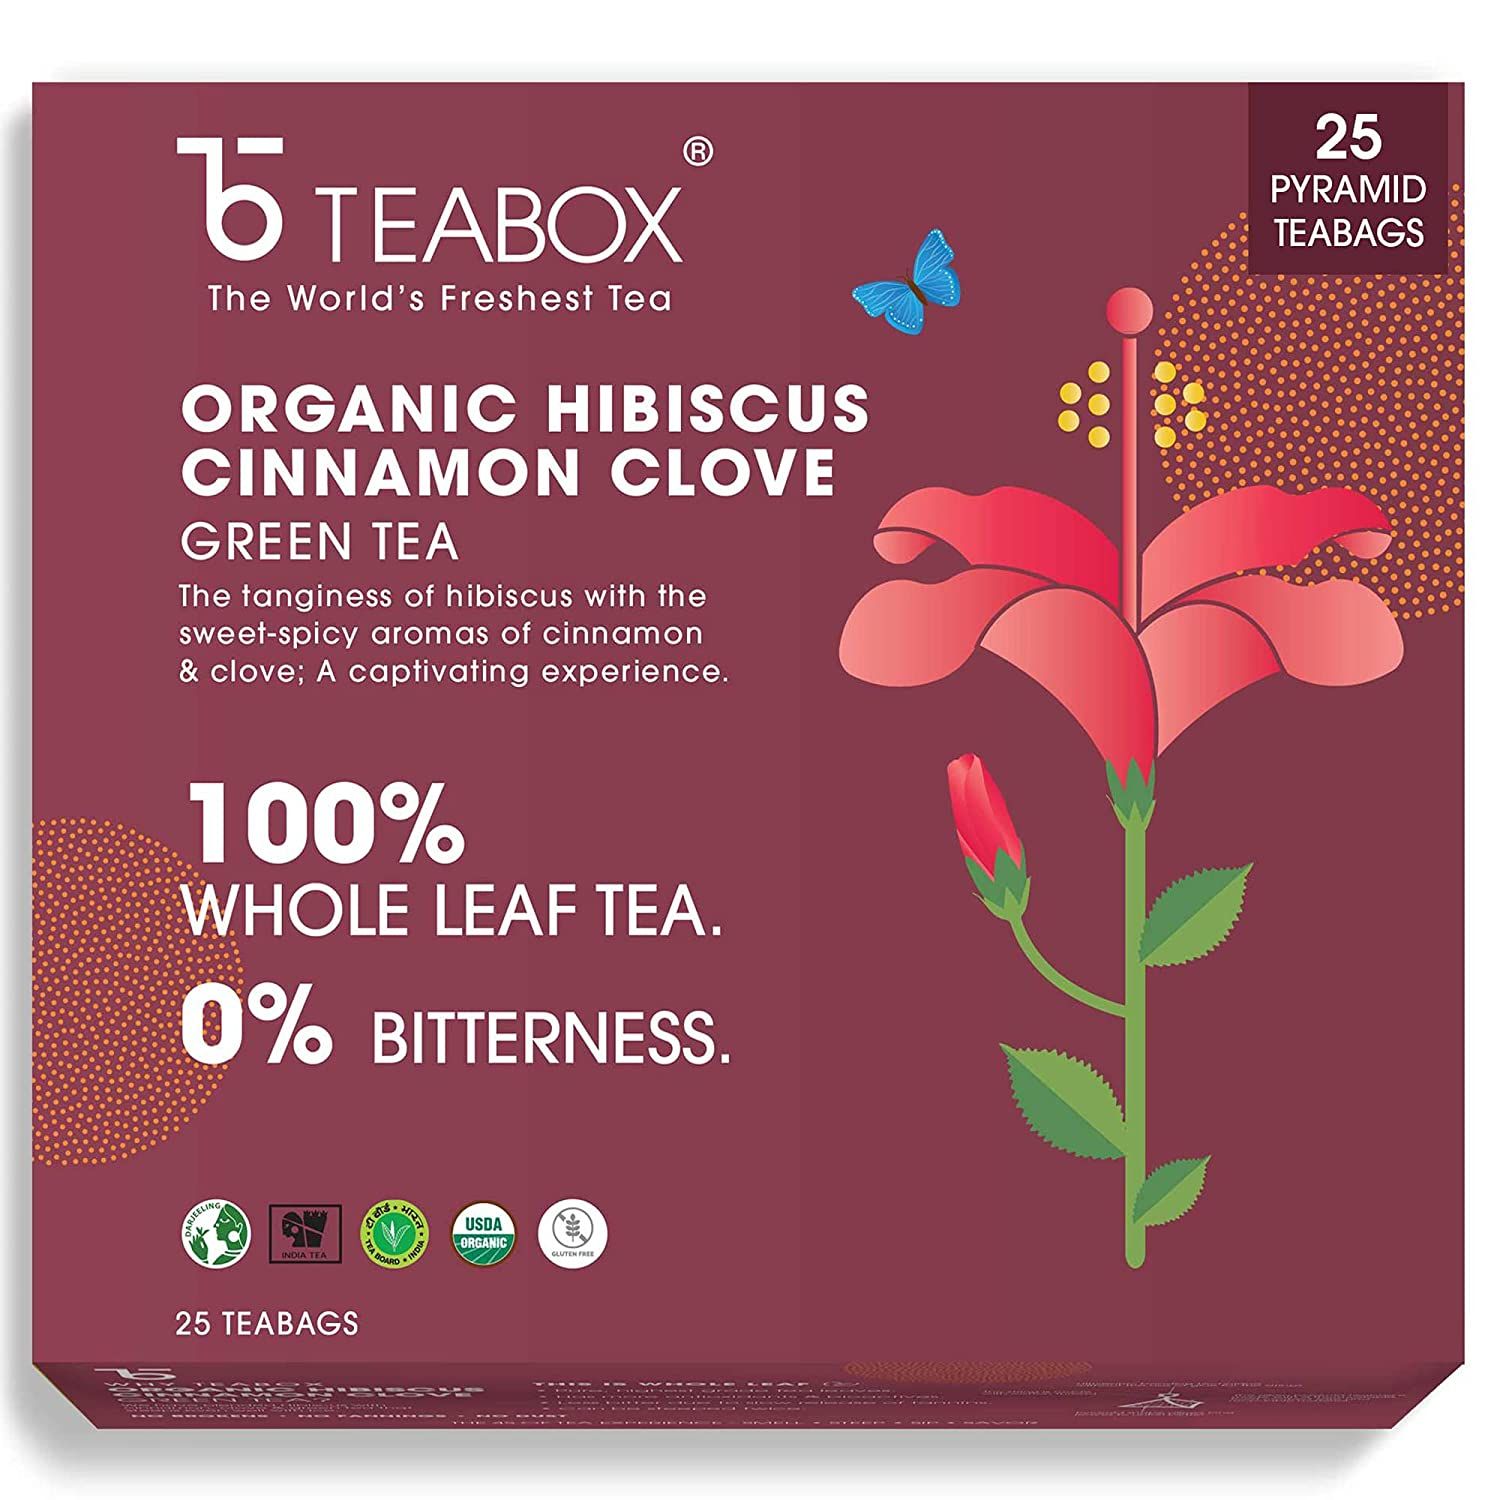 Teabox Organic Hibiscus Cinnamon Clove Image